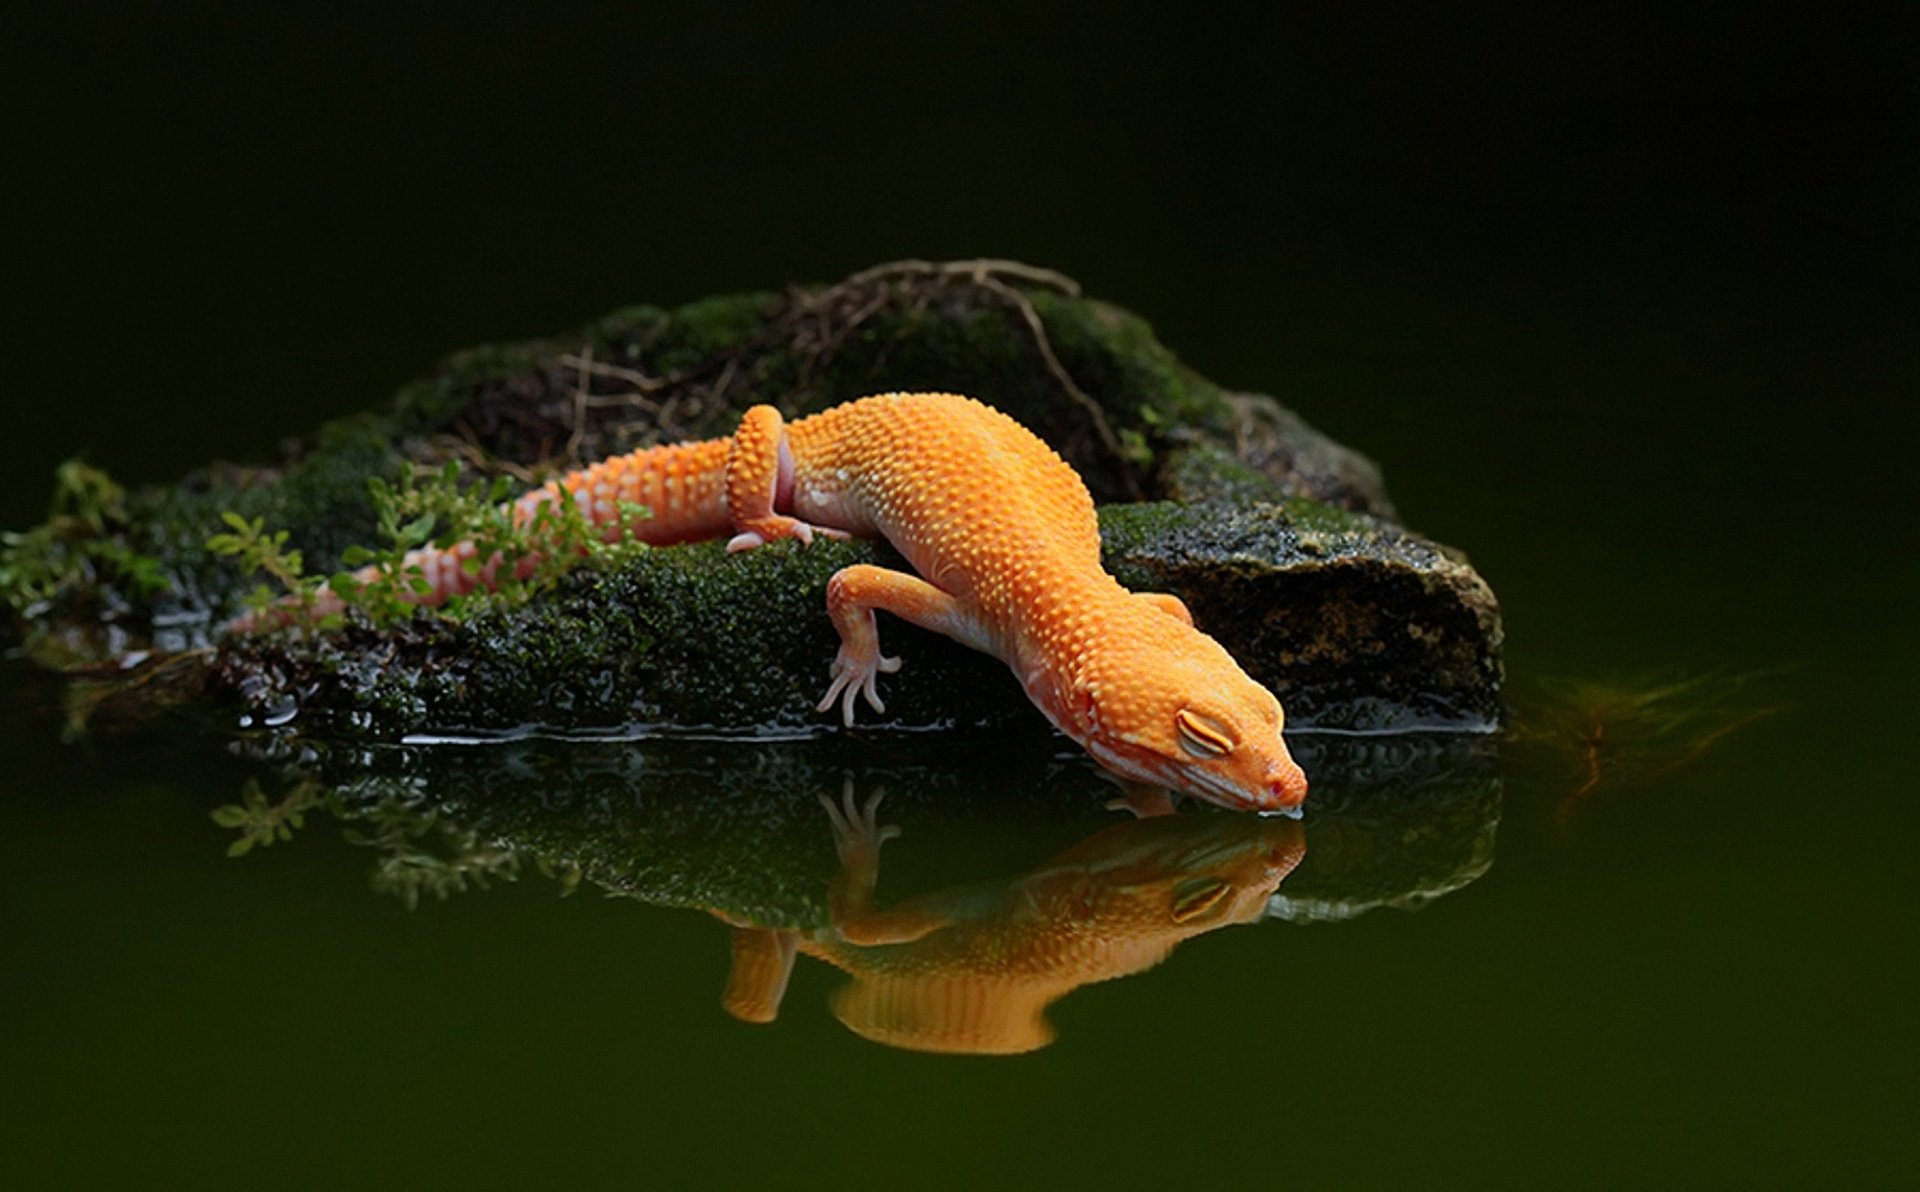 reptile wallpaper,amphibian,true salamanders and newts,newt,reptile,smooth newt